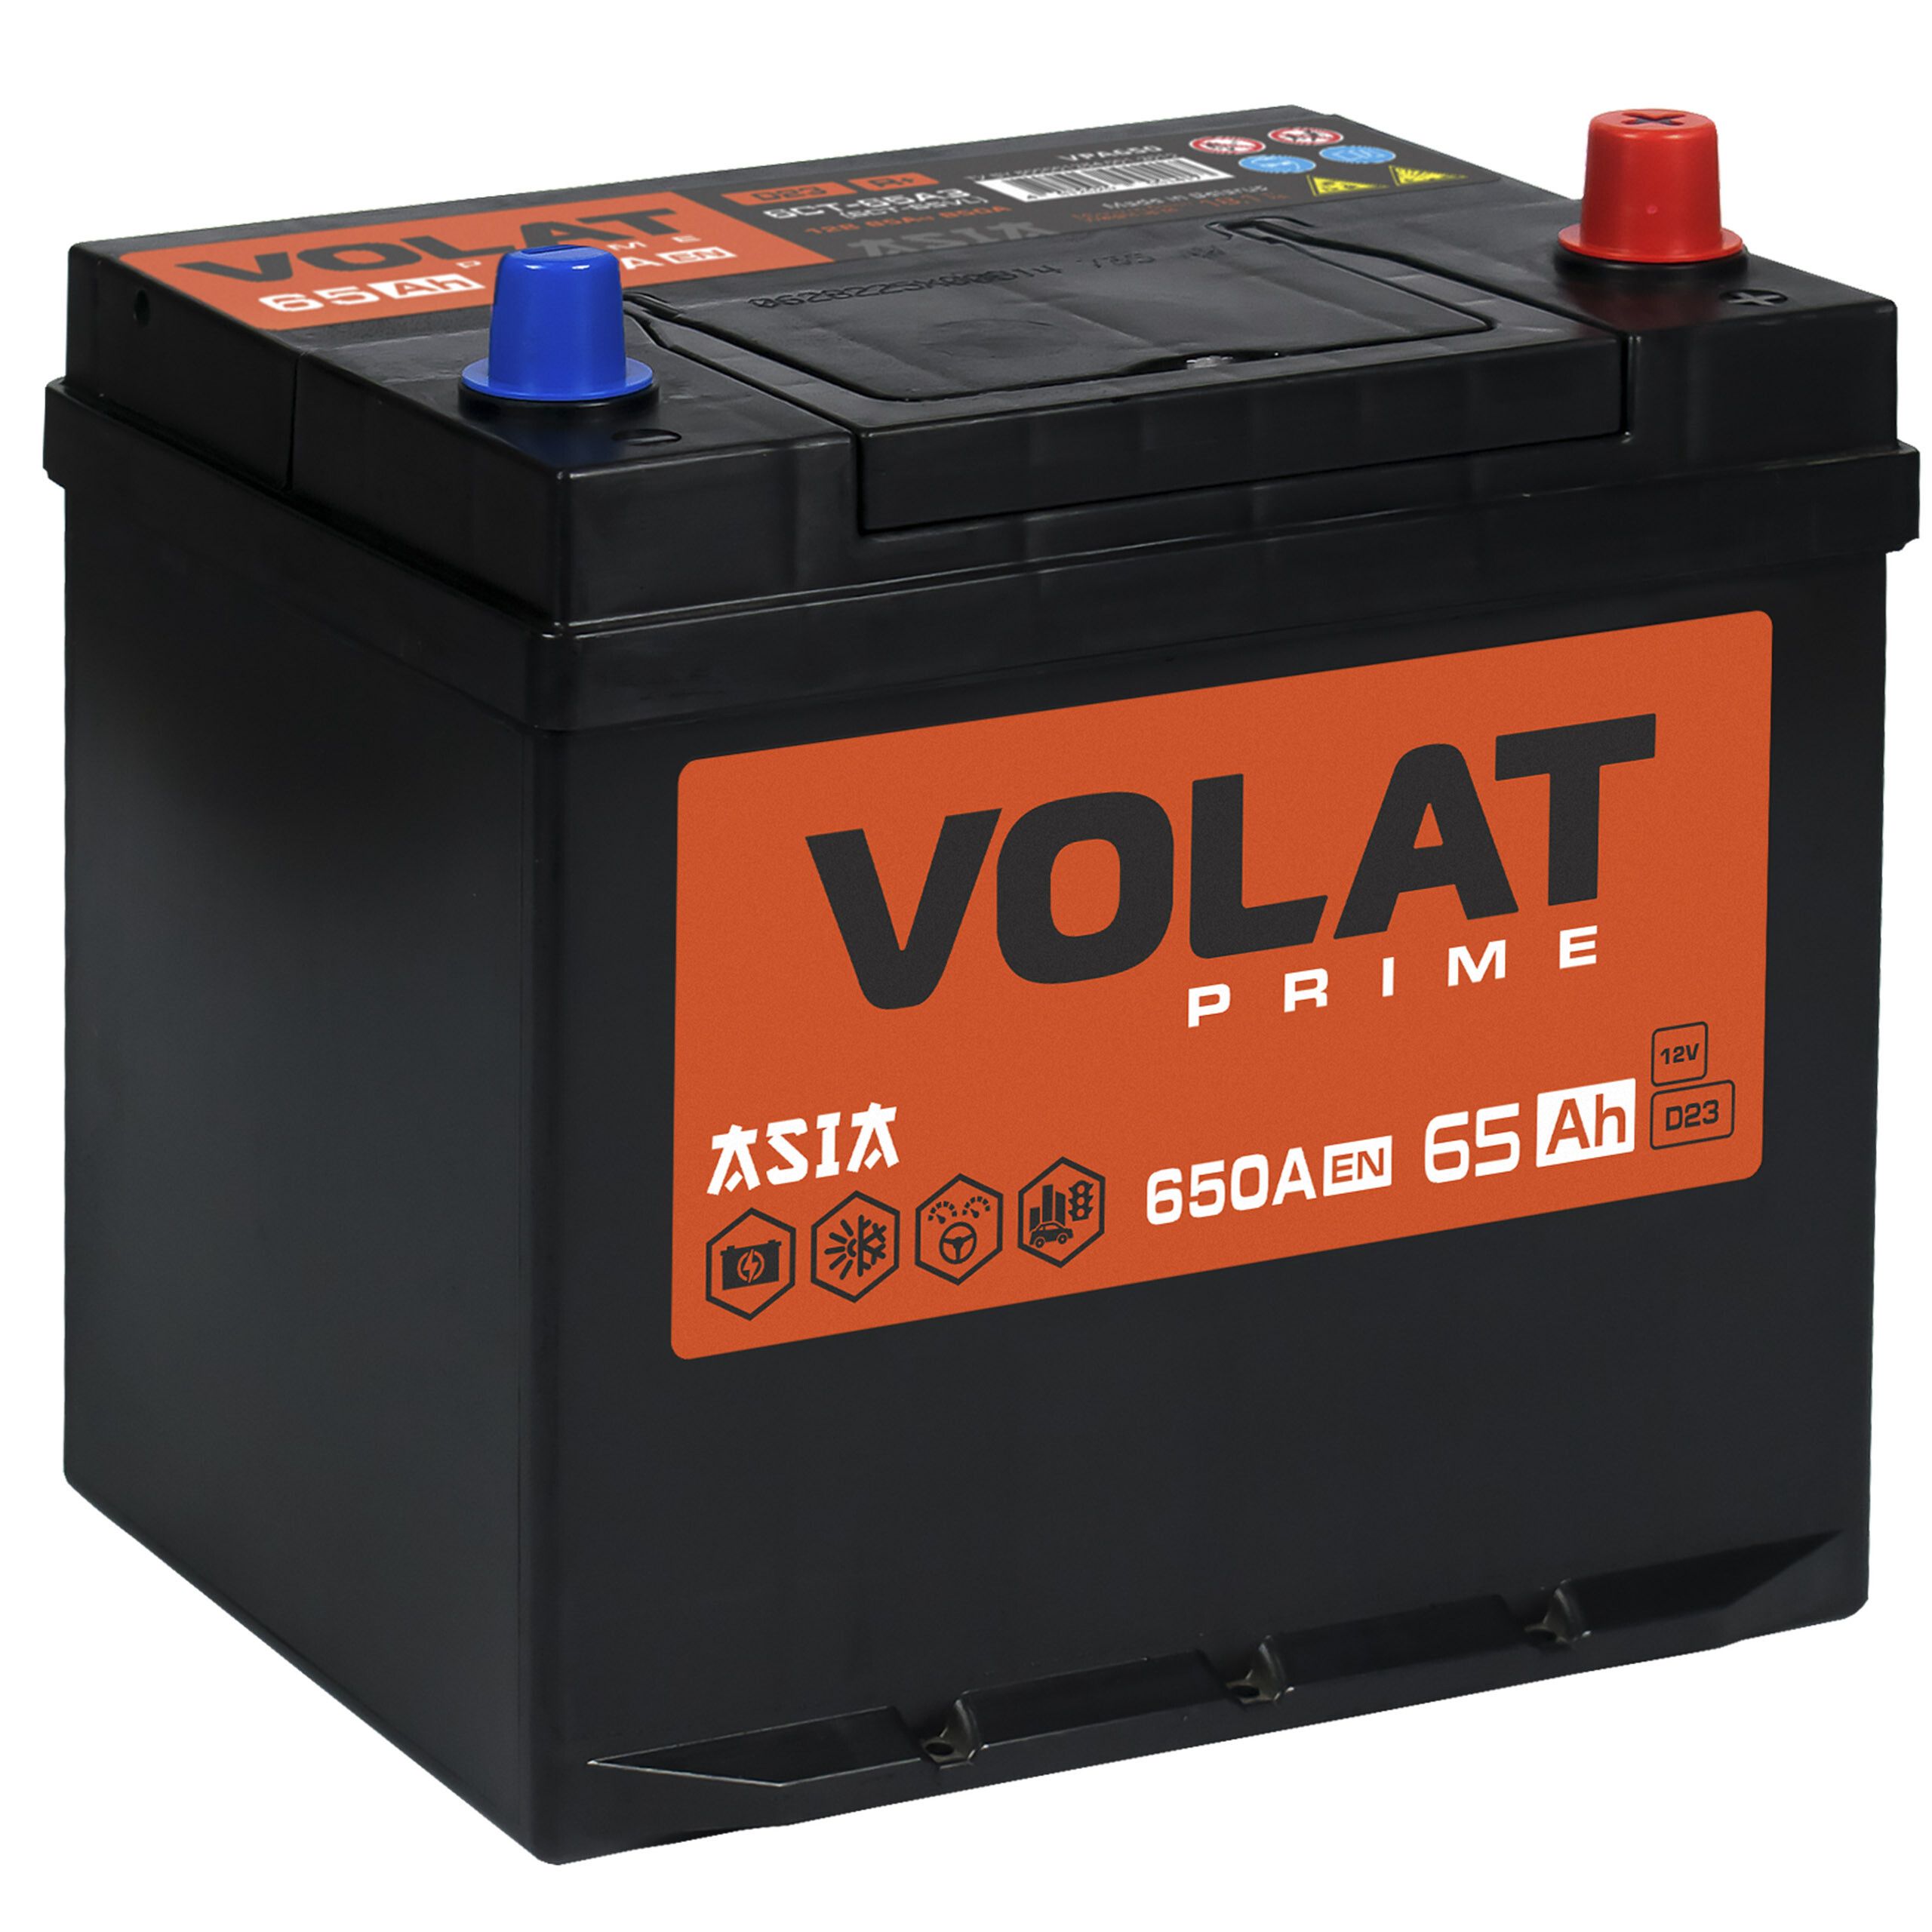 Аккумулятор VOLAT Prime Asia (65 Ah) 650 A, 12 V Прямая, L+